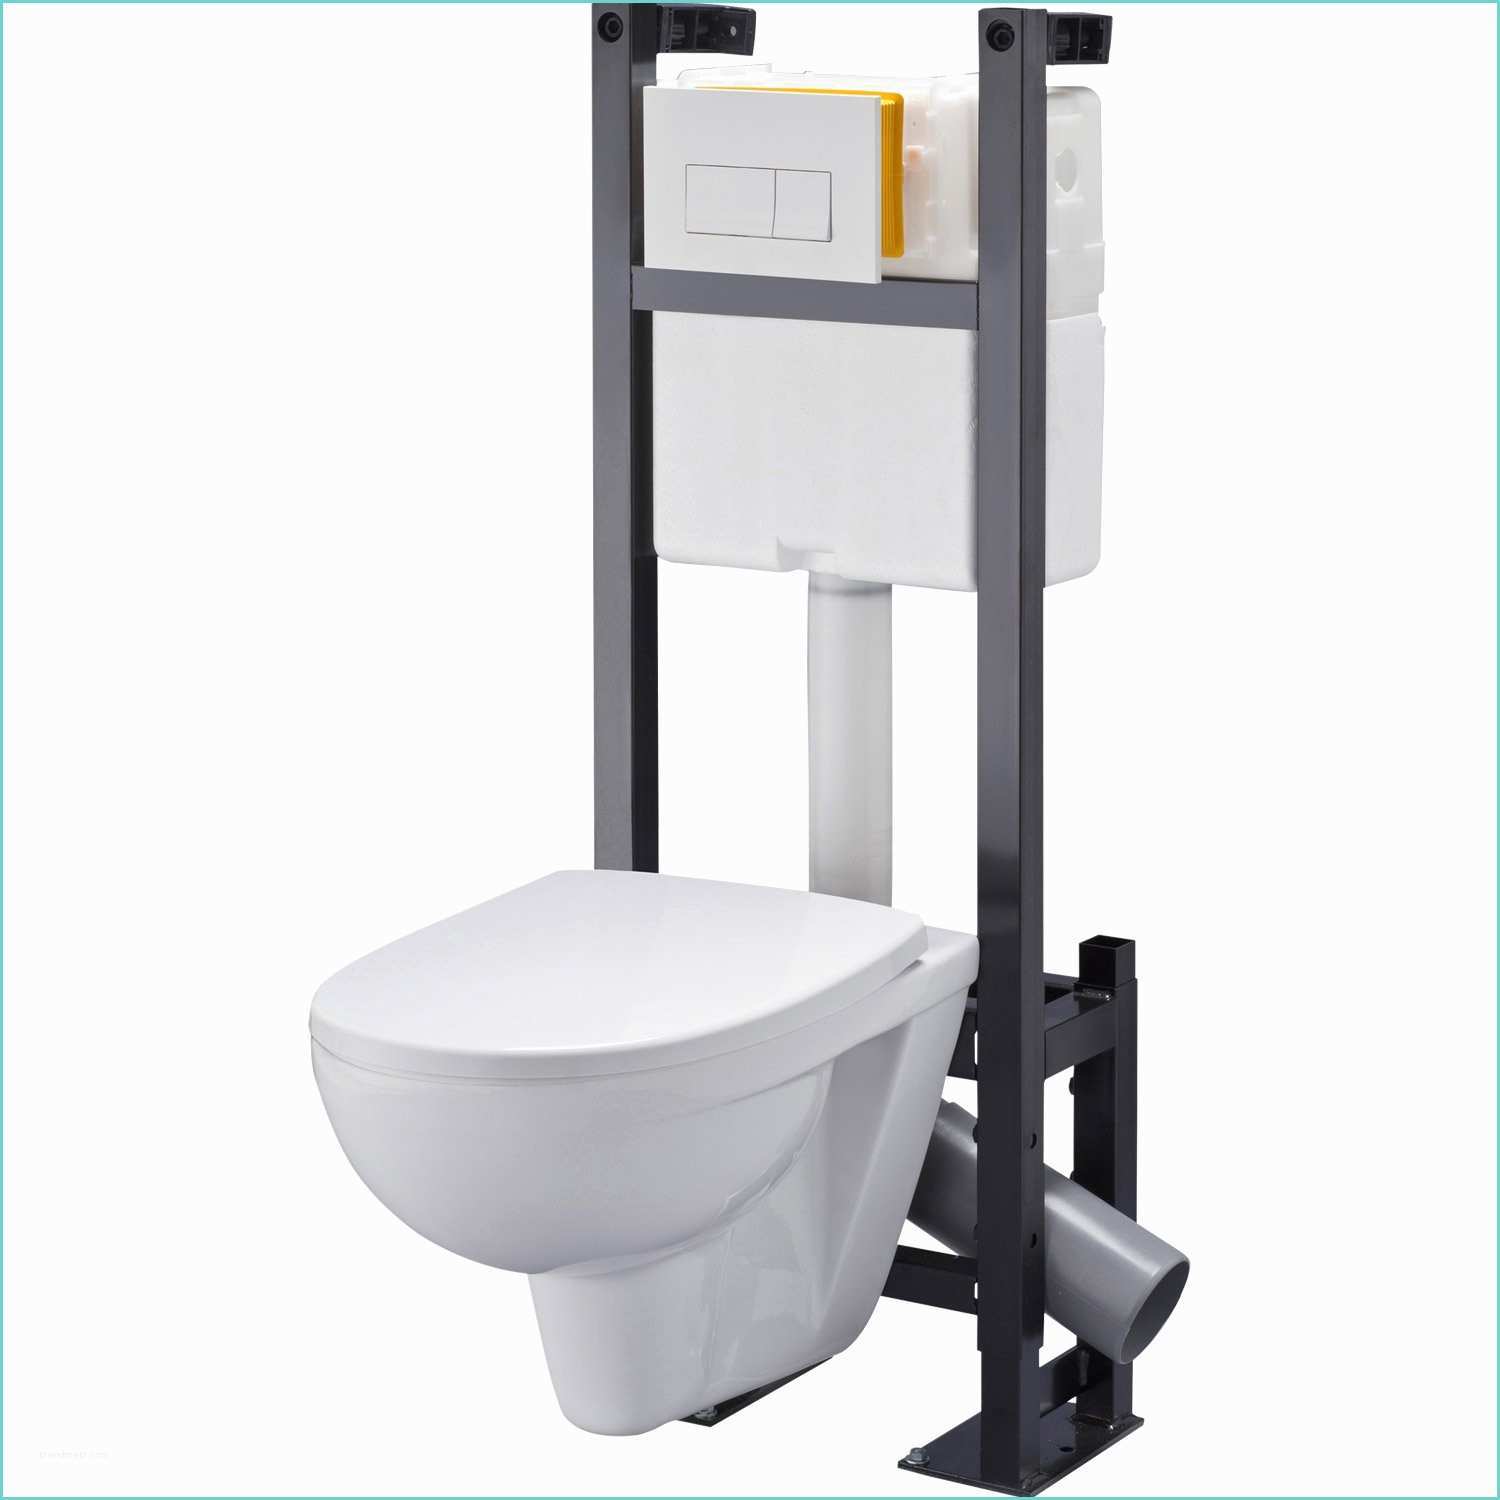 Toilettes Suspendues Leroy Merlin Pack Wc Suspendu Bâti Universel Club Design 4 Pieds